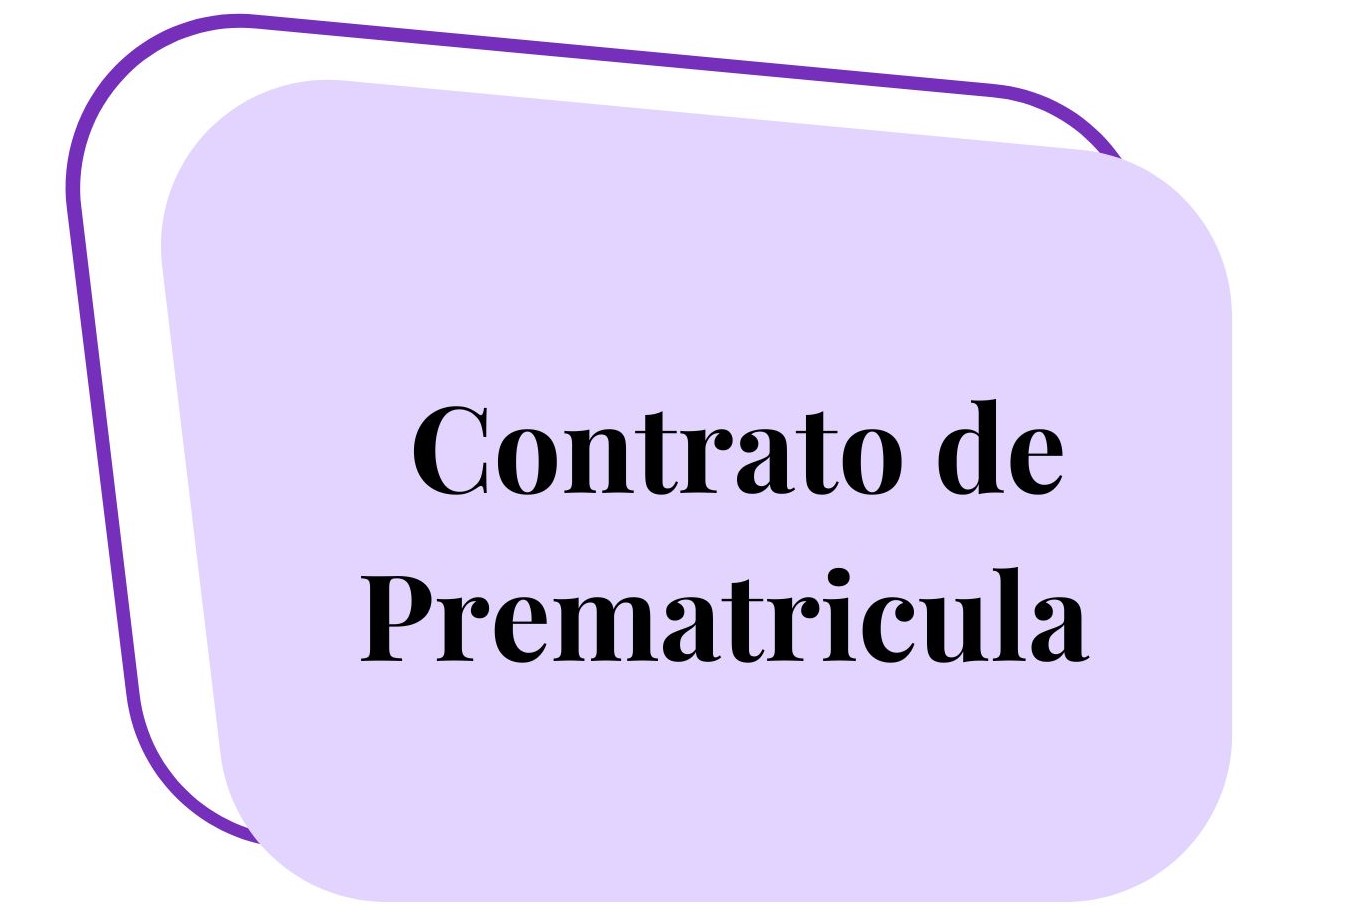 Contratode prematricula